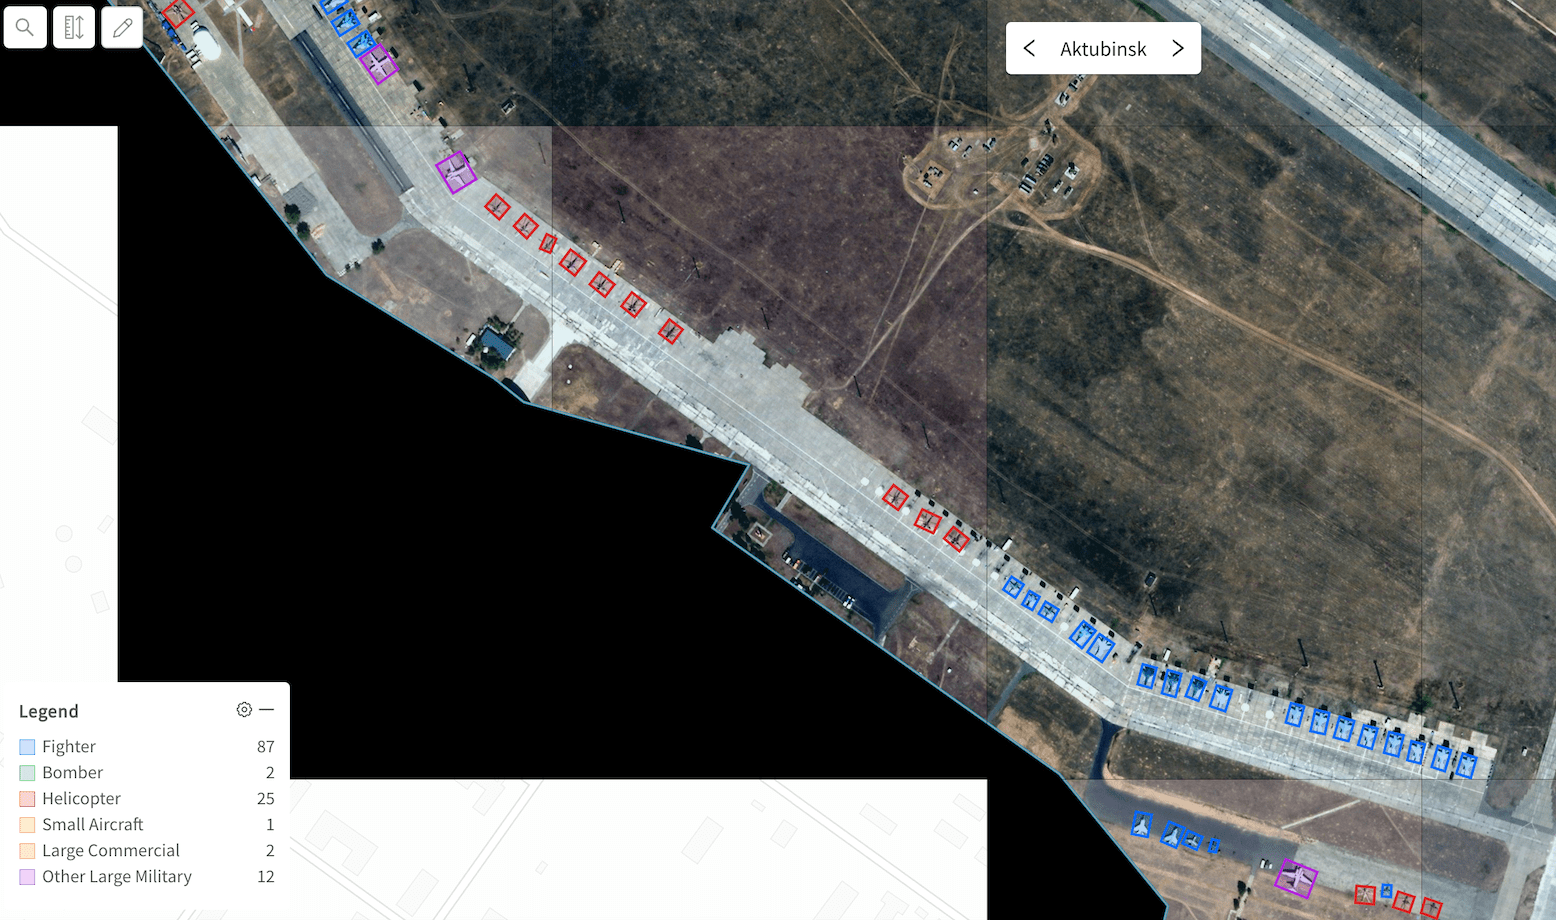 Aircraft detections at a Russian air base - as rotated bounding boxes